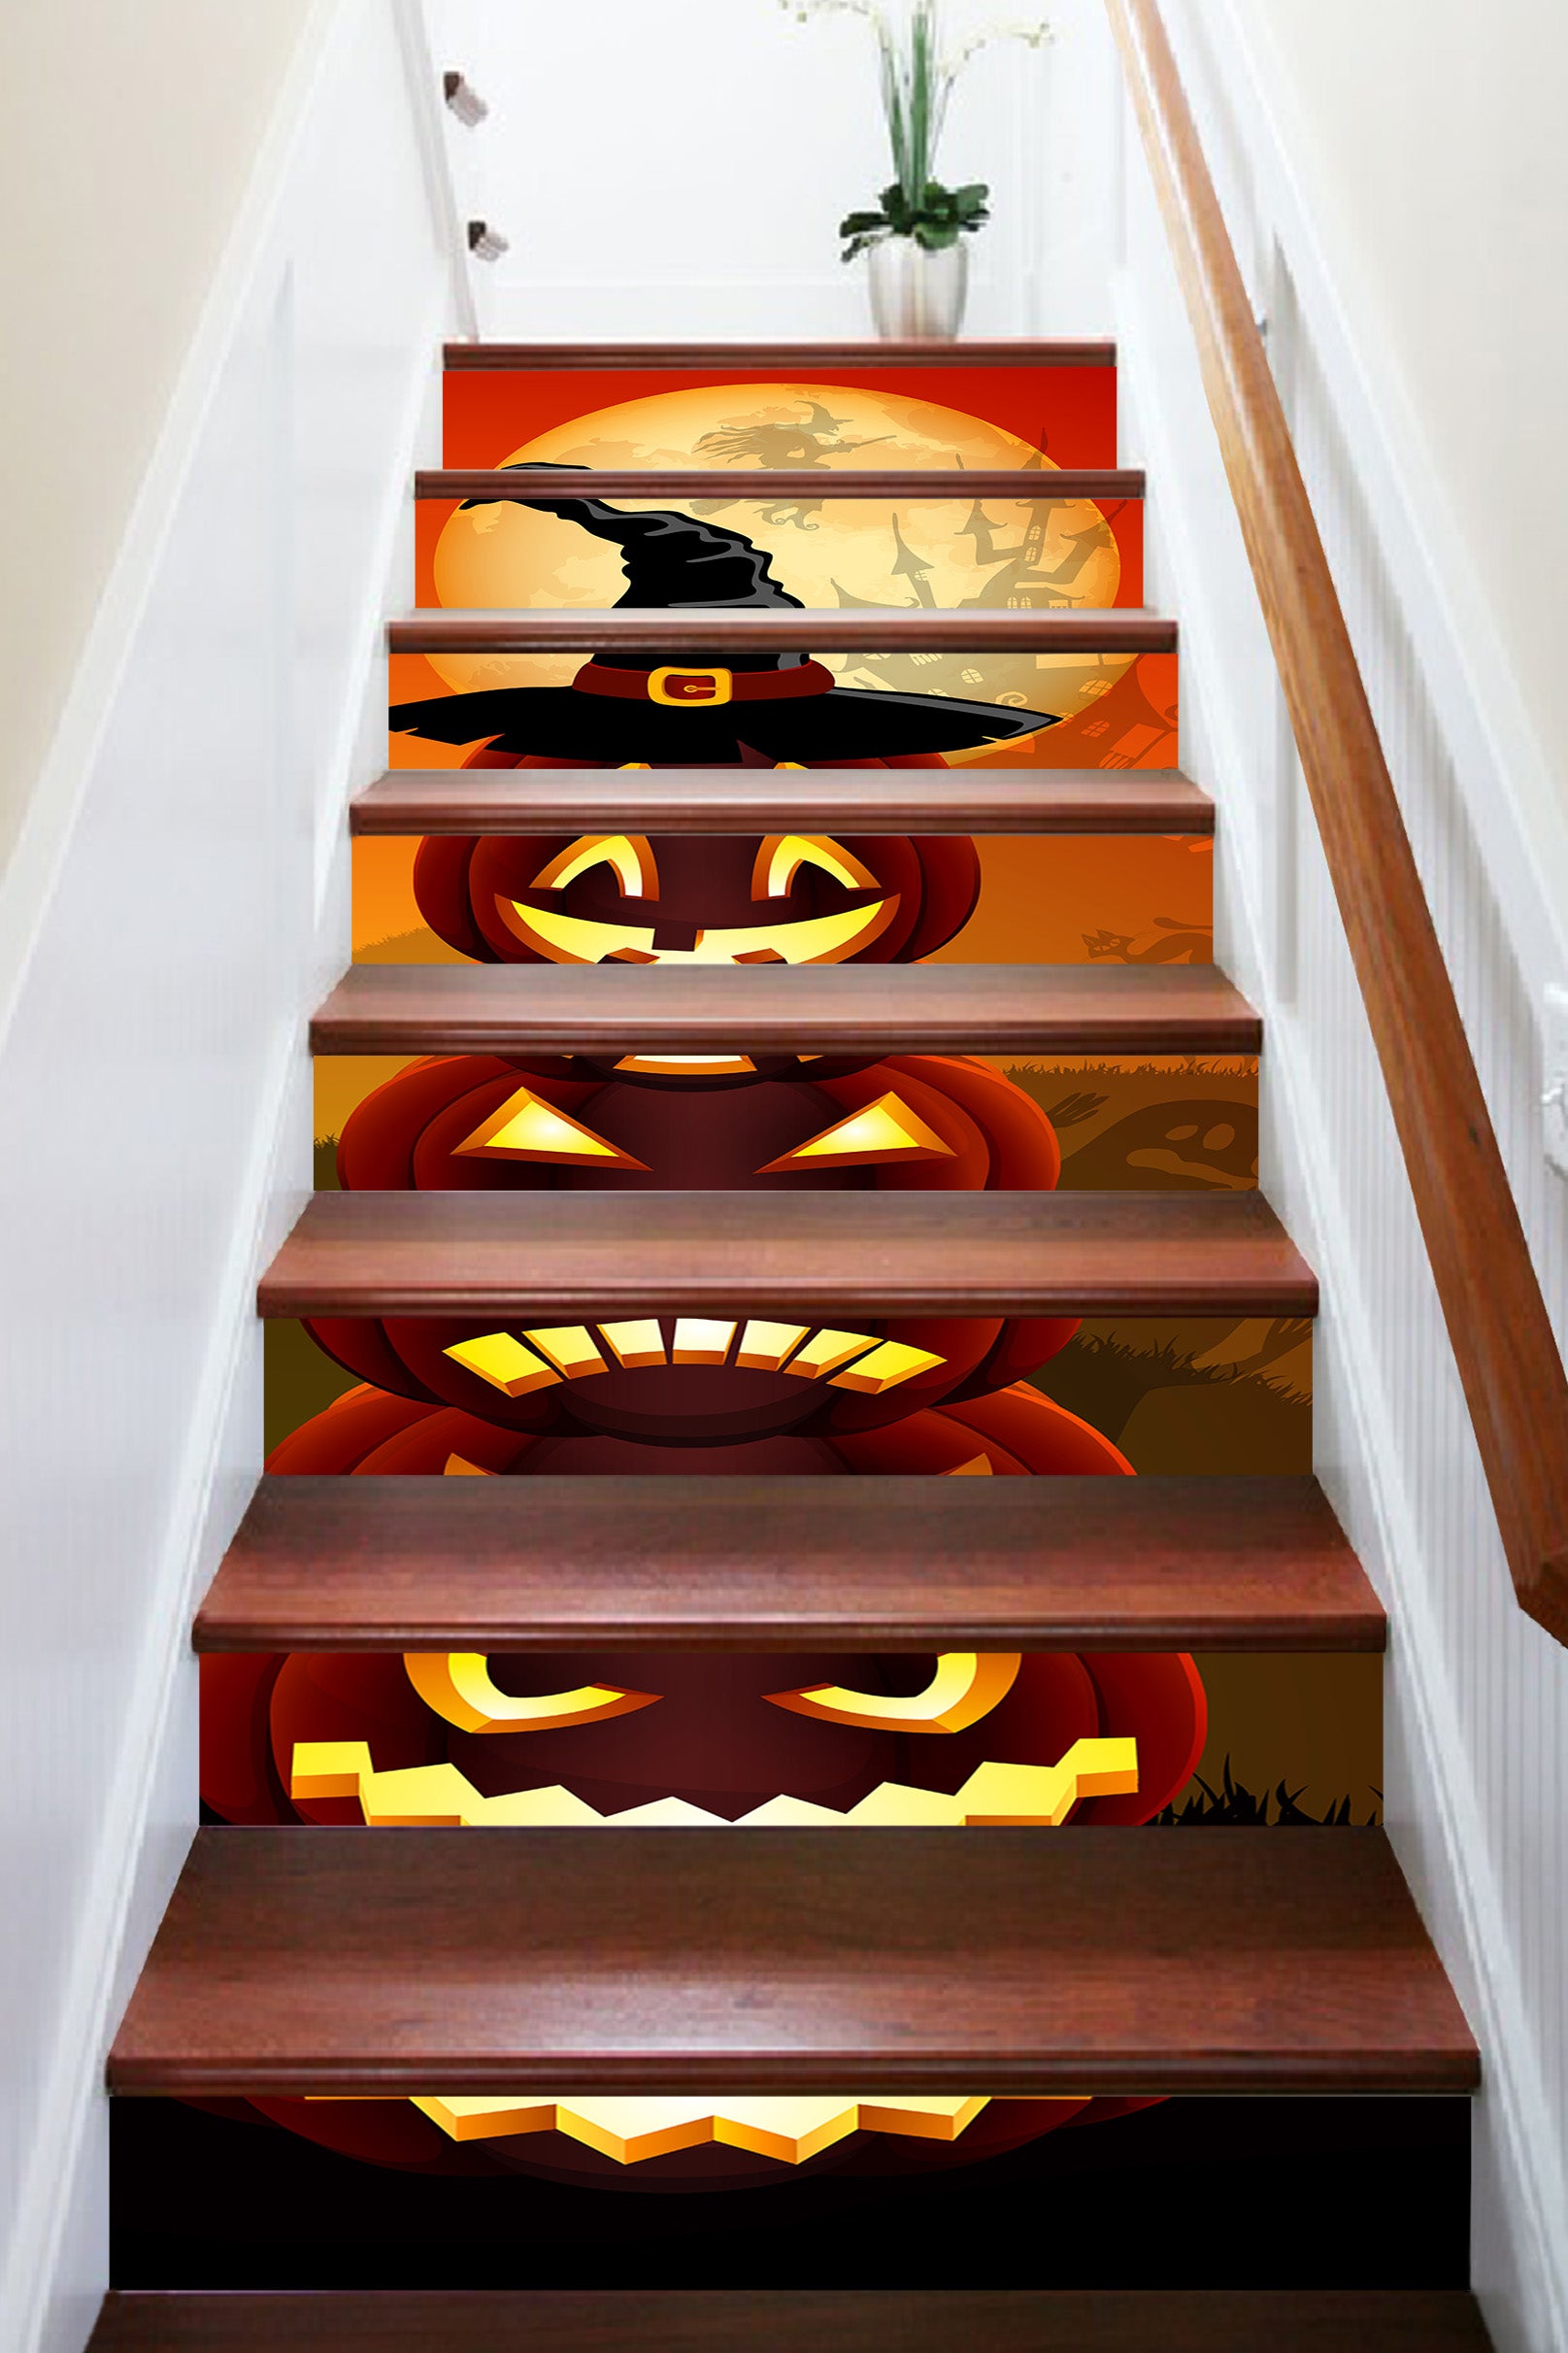 3D Three Emoji Of Pumpkins 653 Stair Risers